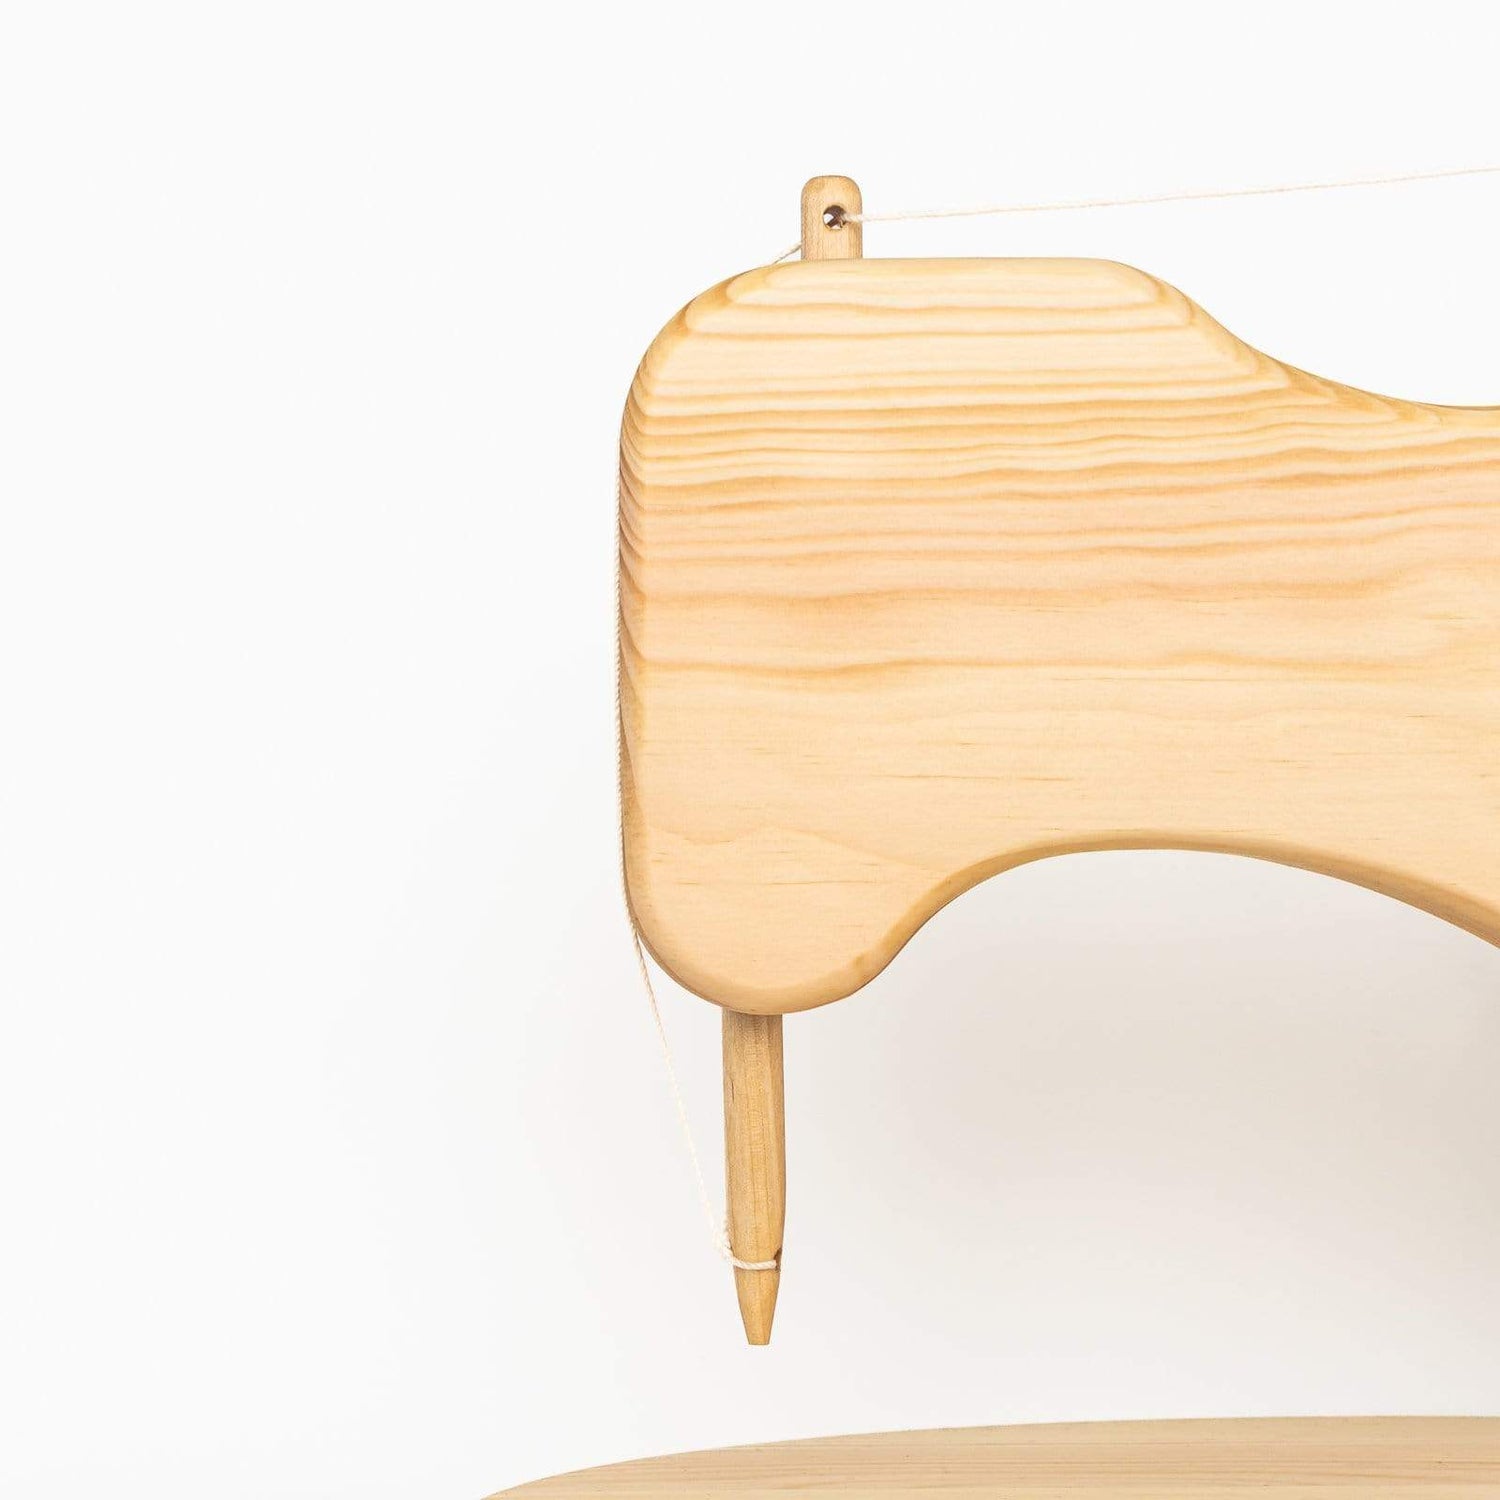 Nashe Derevce Pretend Play Handmade Wooden Sewing Machine